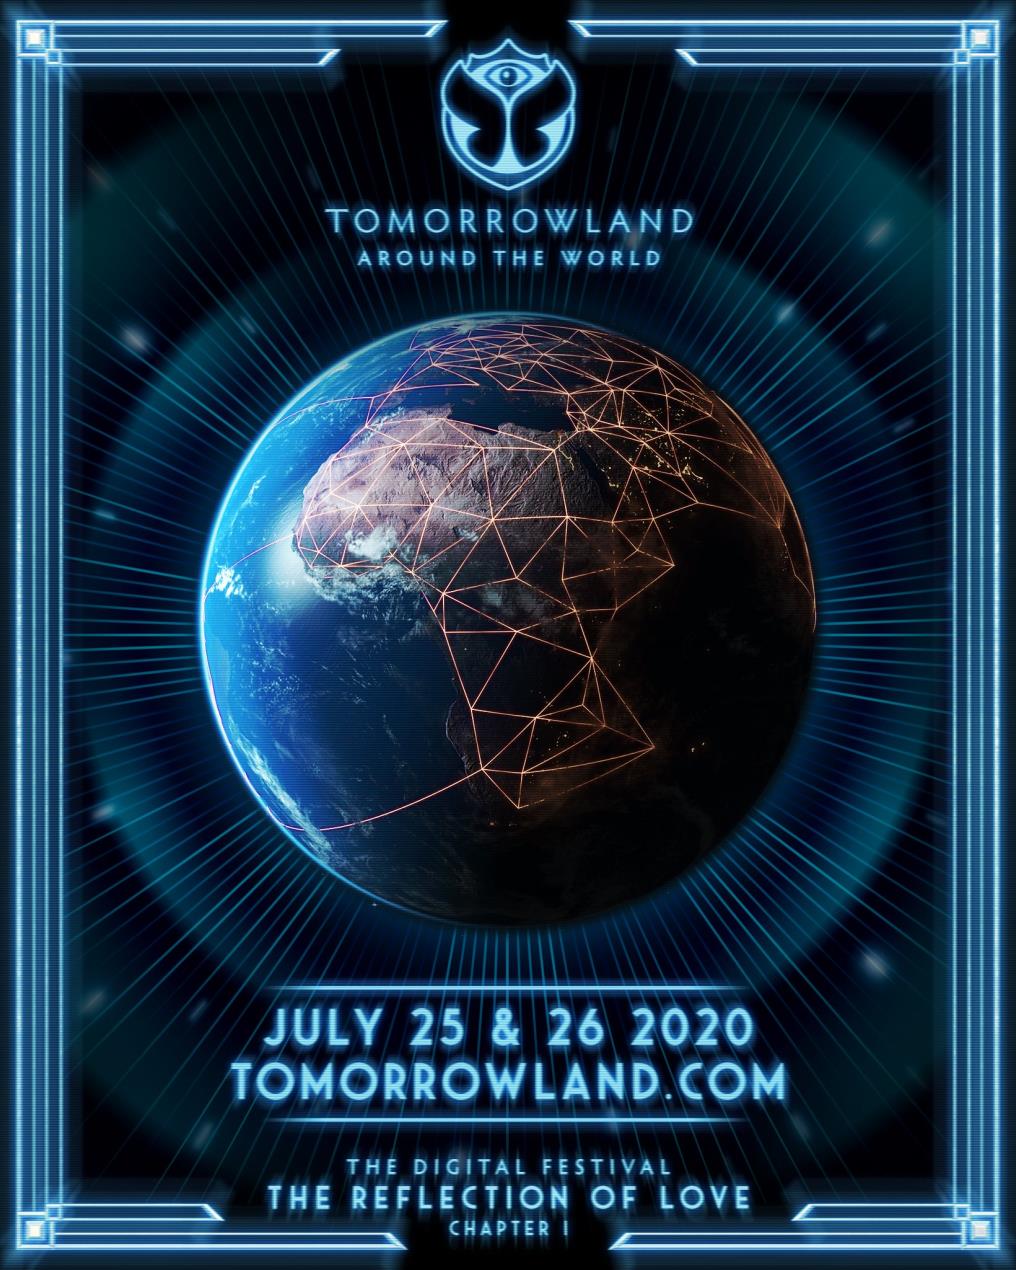 Tomorrowland - Around The World